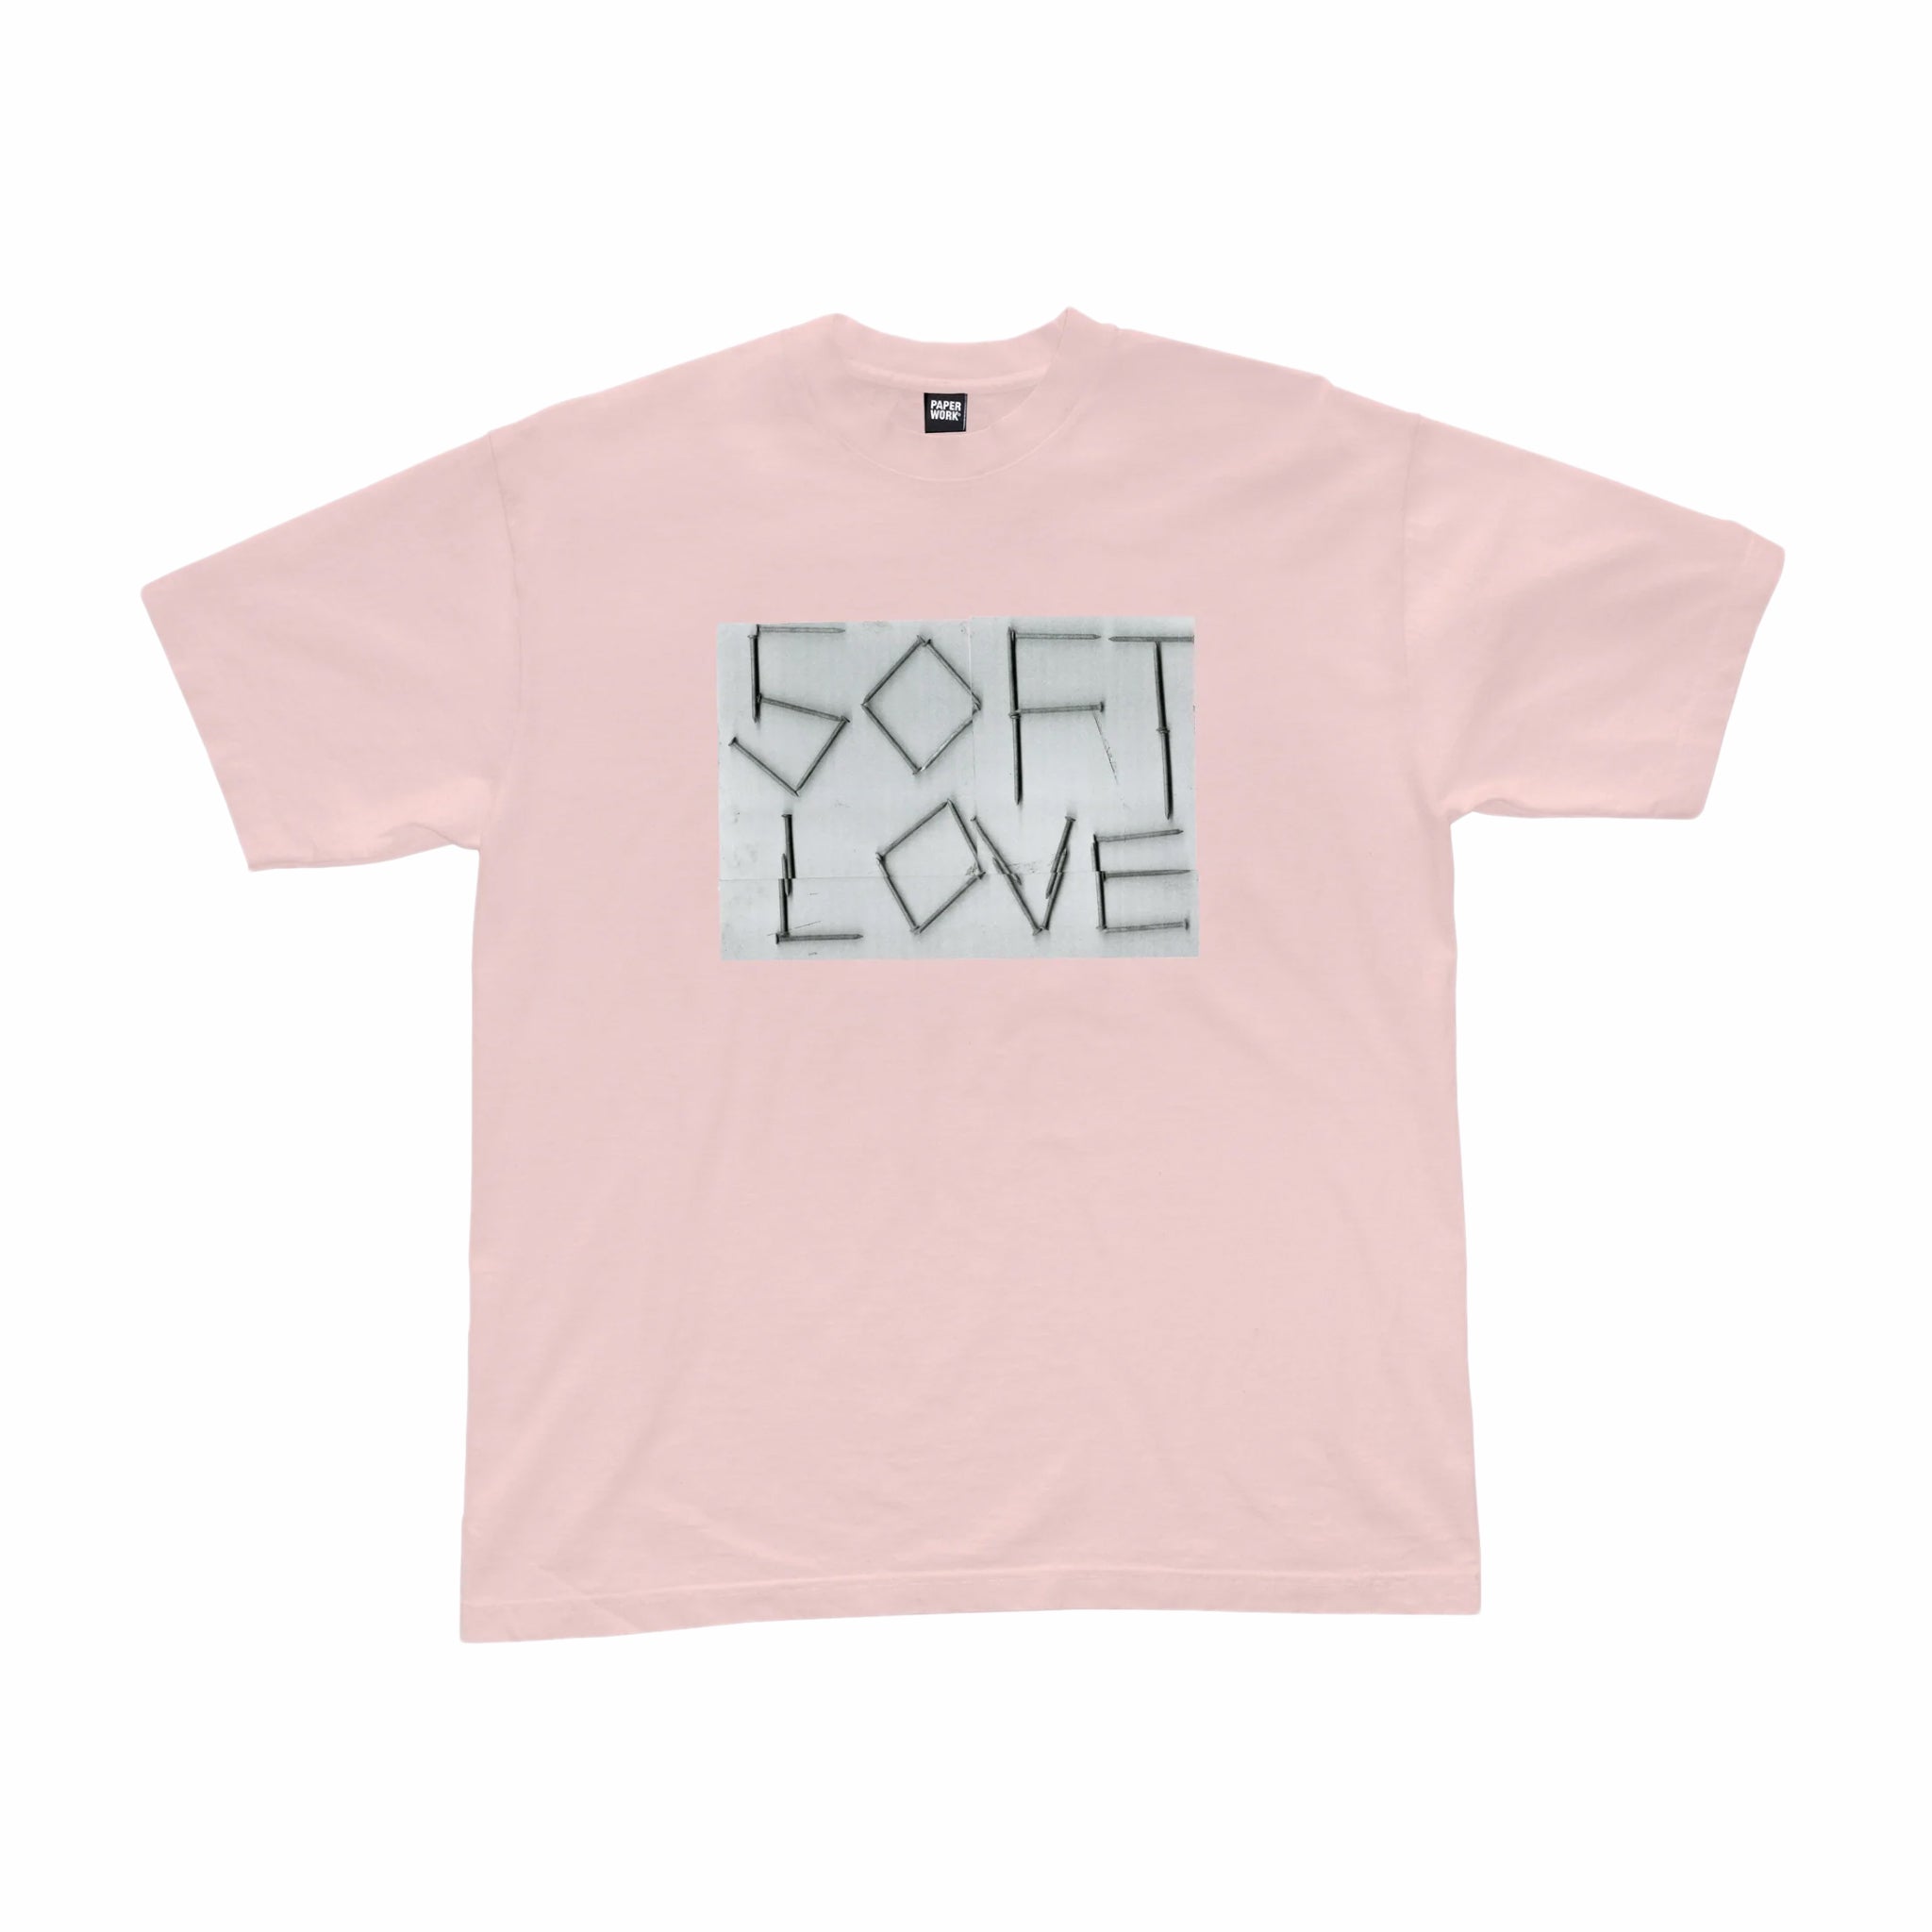 Lavoro cartaceo, T-shirt Paper Work Soft Love P/E (rosa)